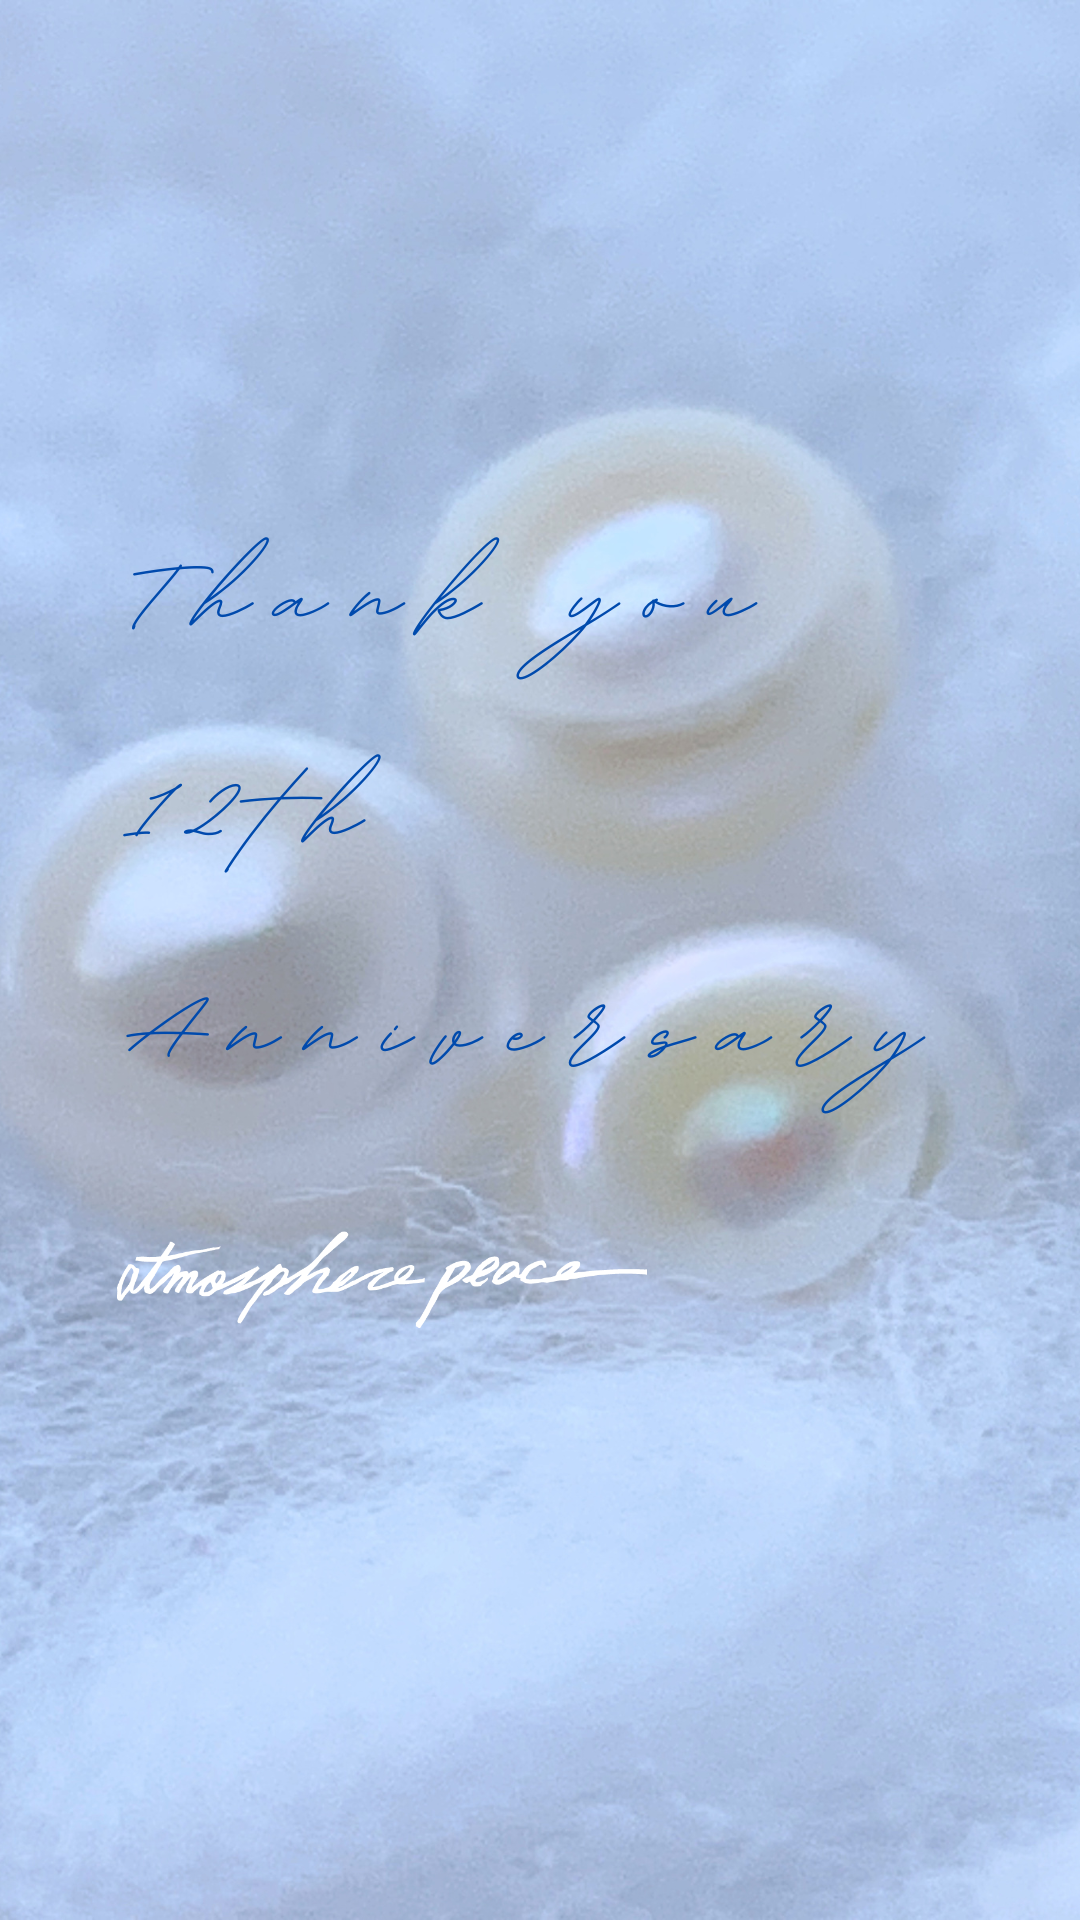 Thank you 12th AnniversaryP